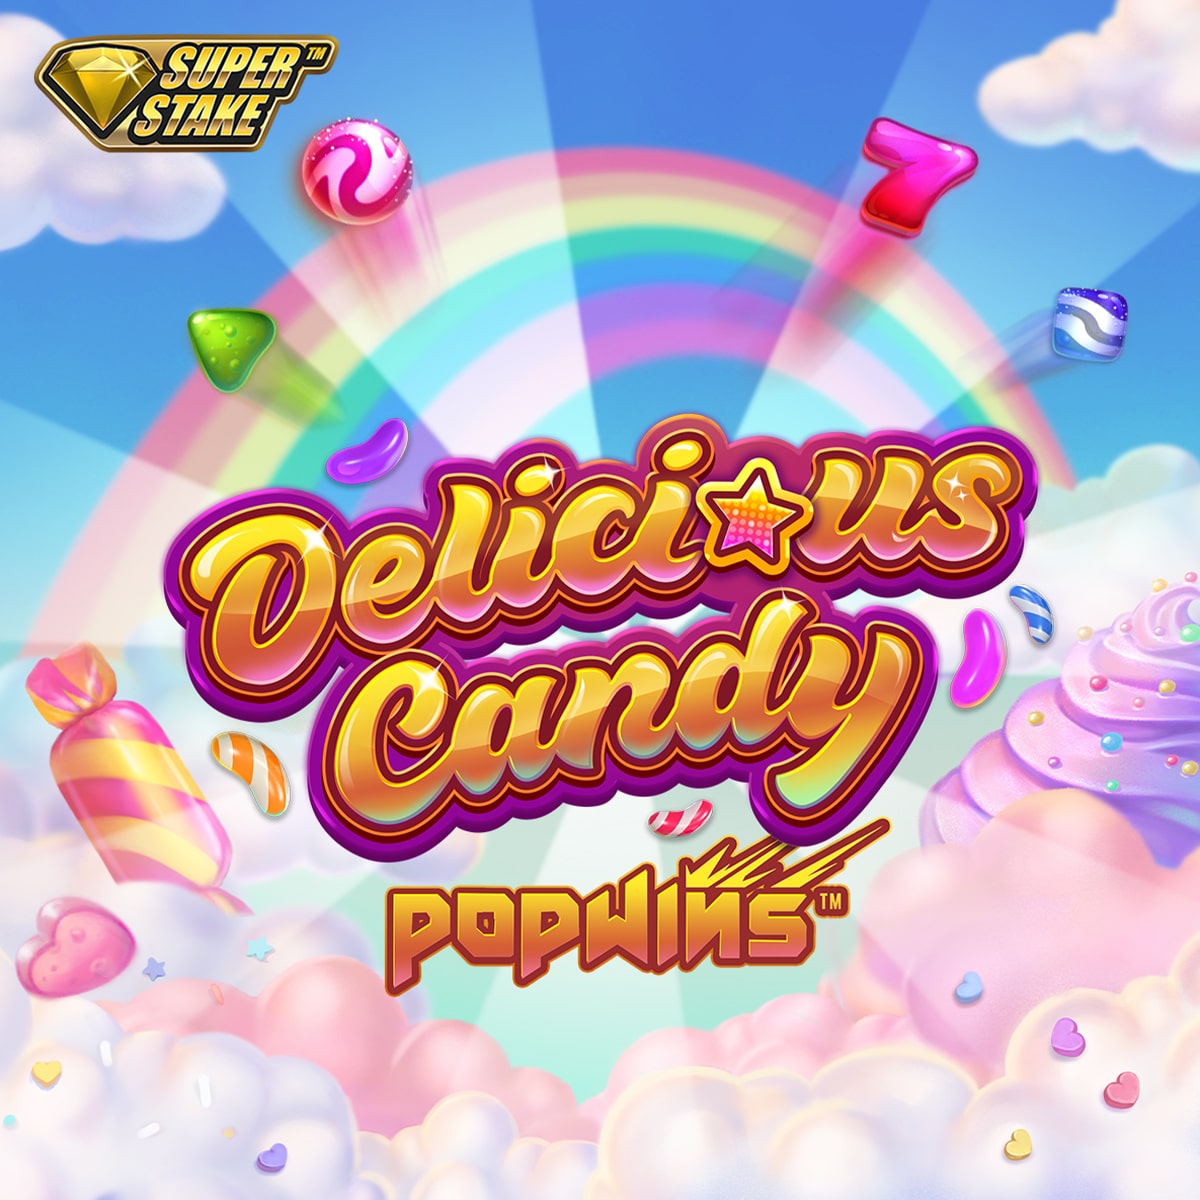 Delicious Candy PopWins Logo